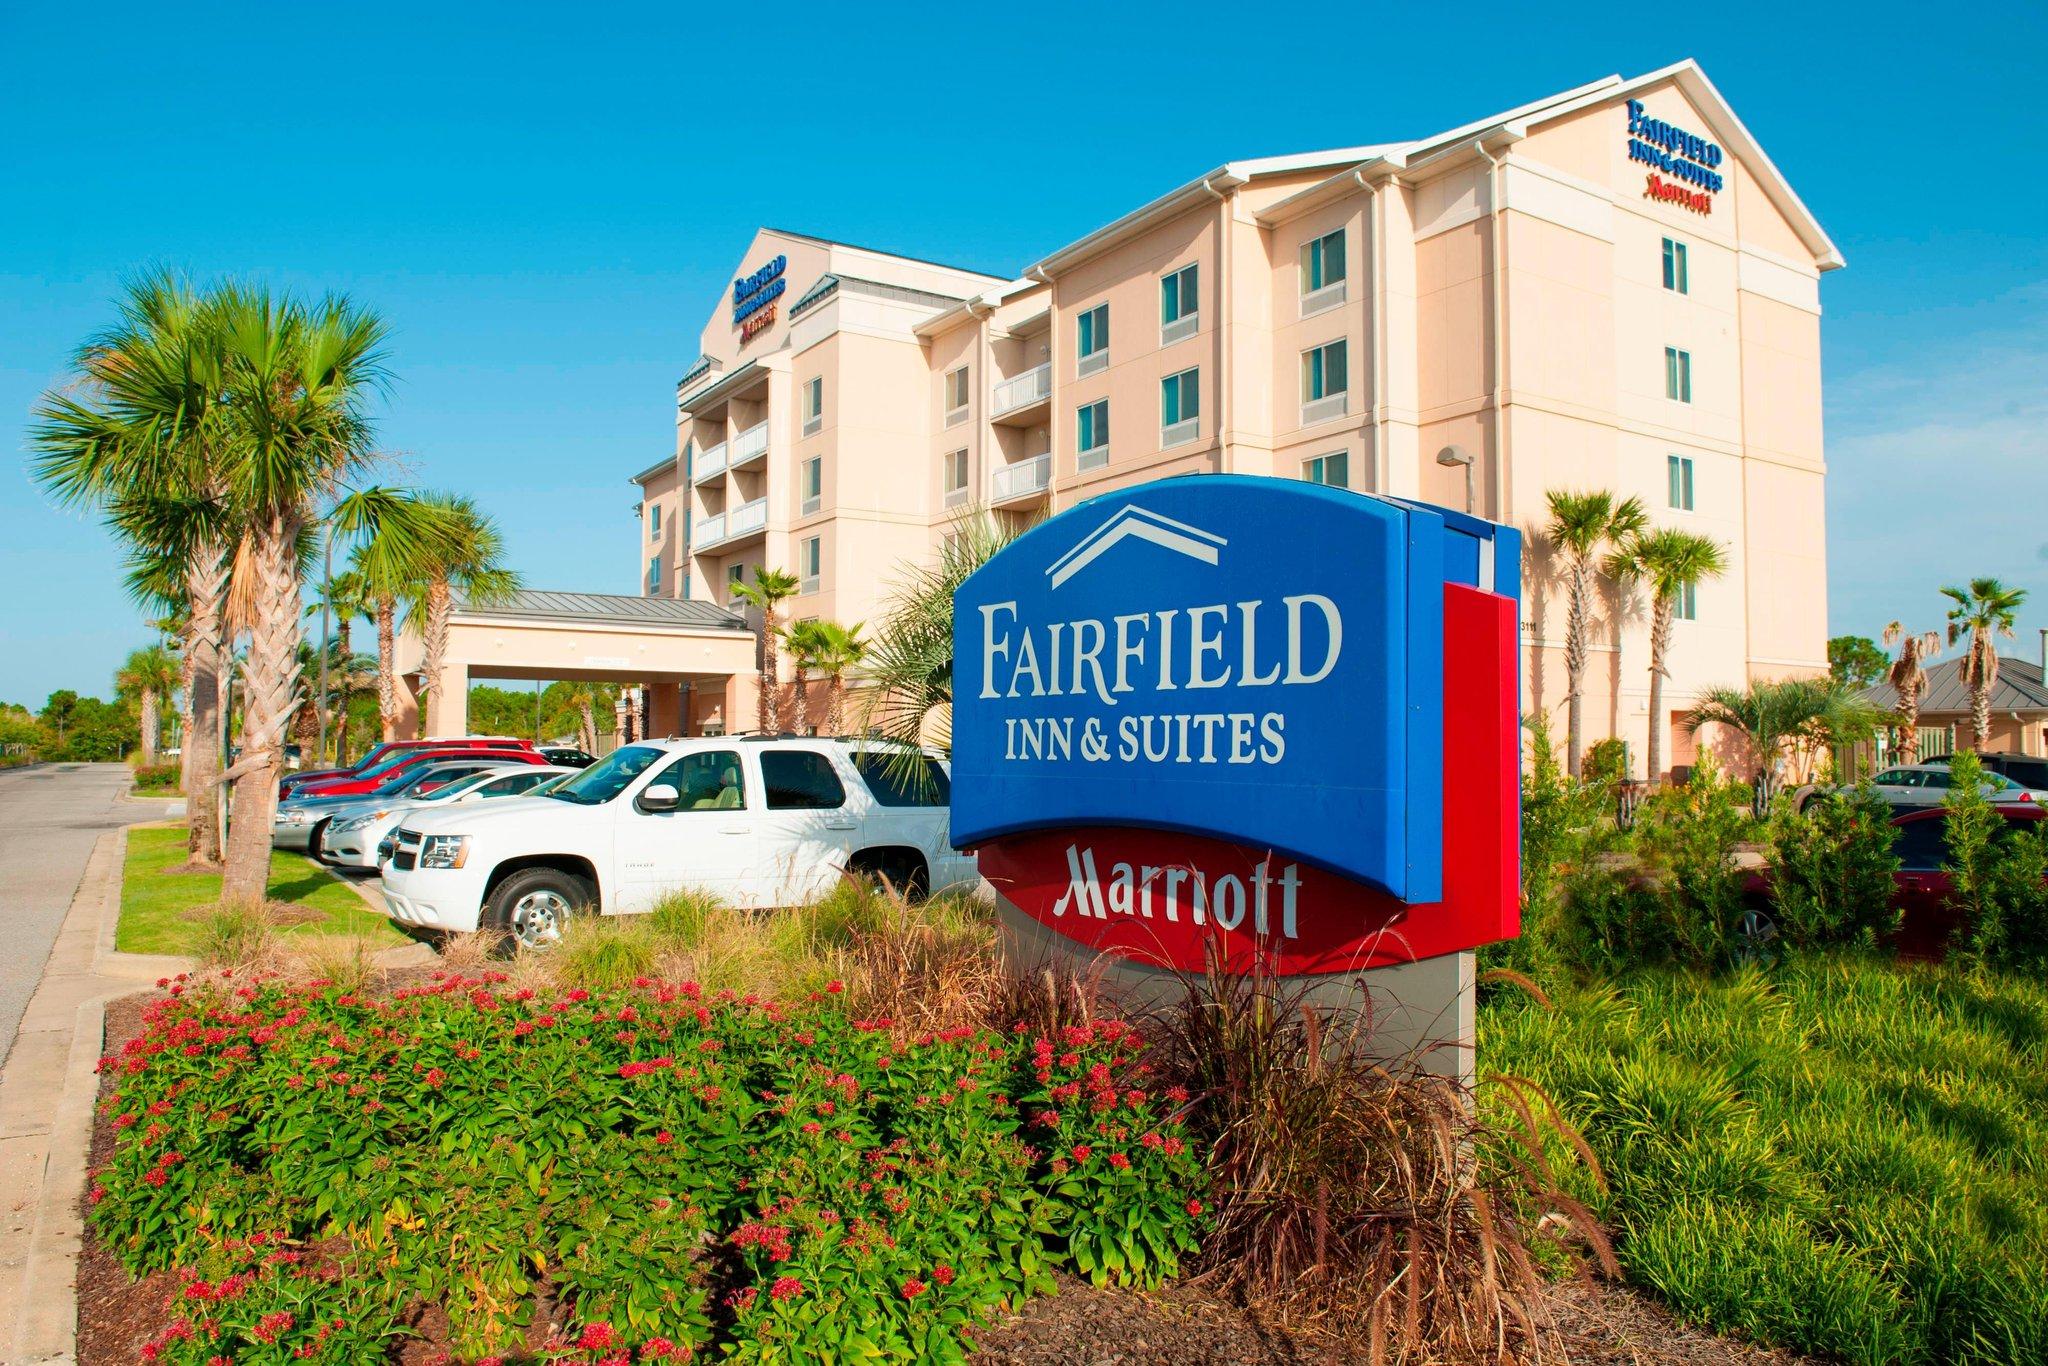 Fairfield Inn & Suites Orange Beach in Orange Beach, AL